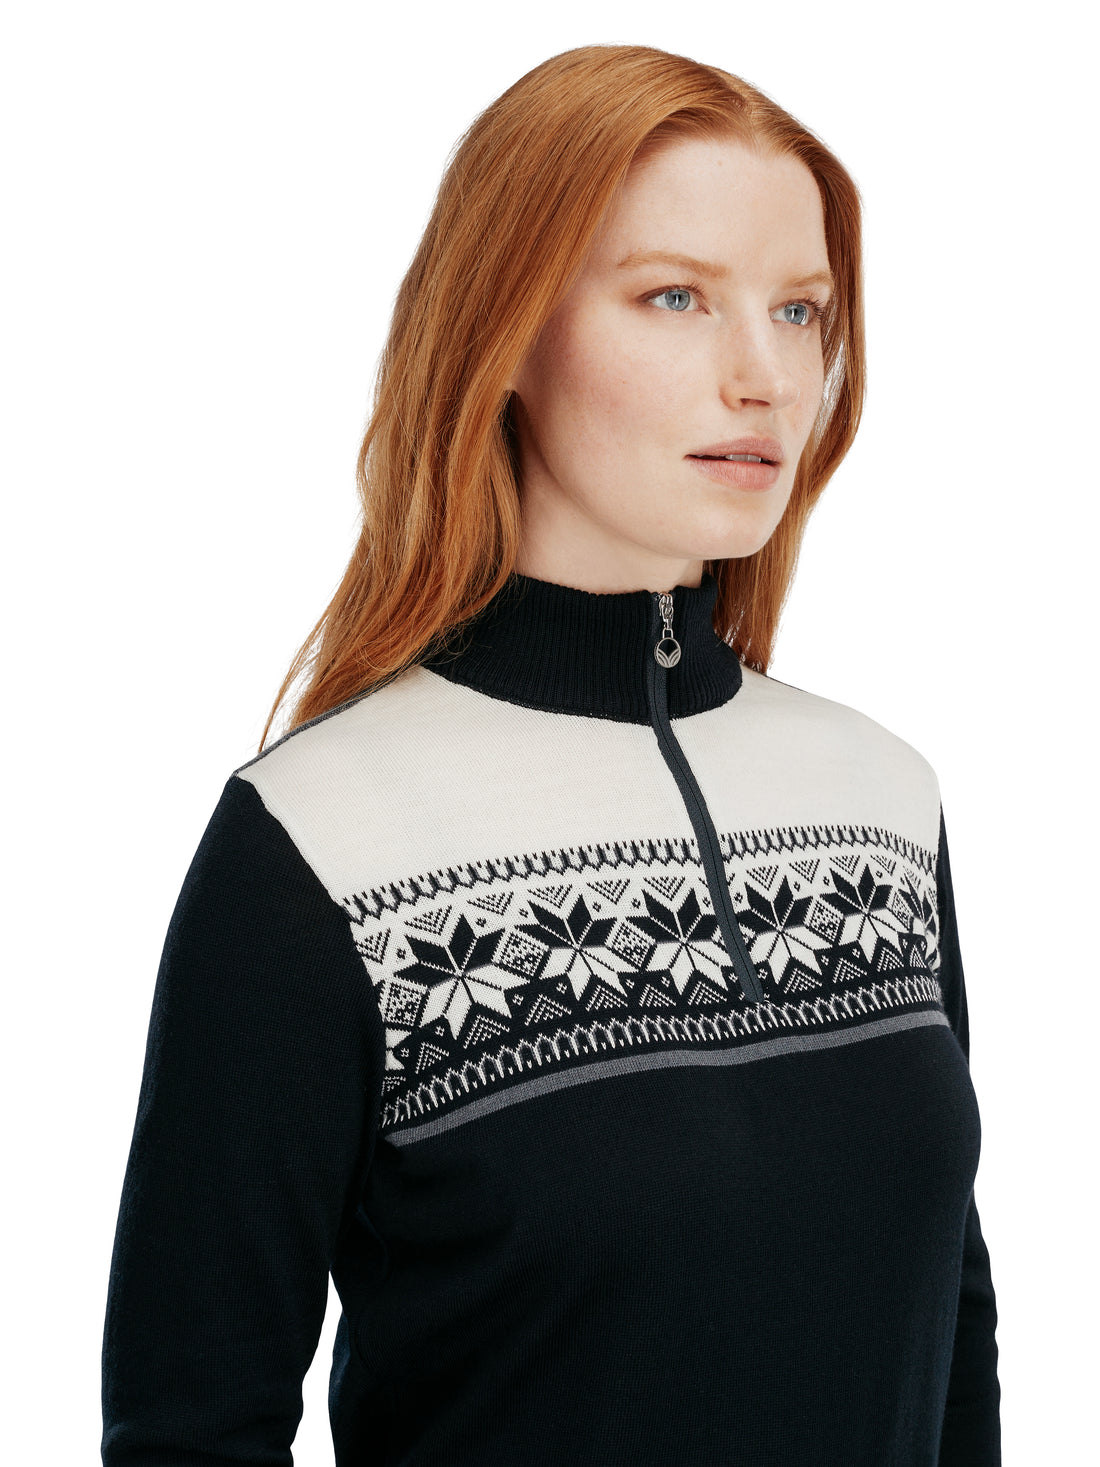 Dale of Norway - Liberg Women's Sweater - Black